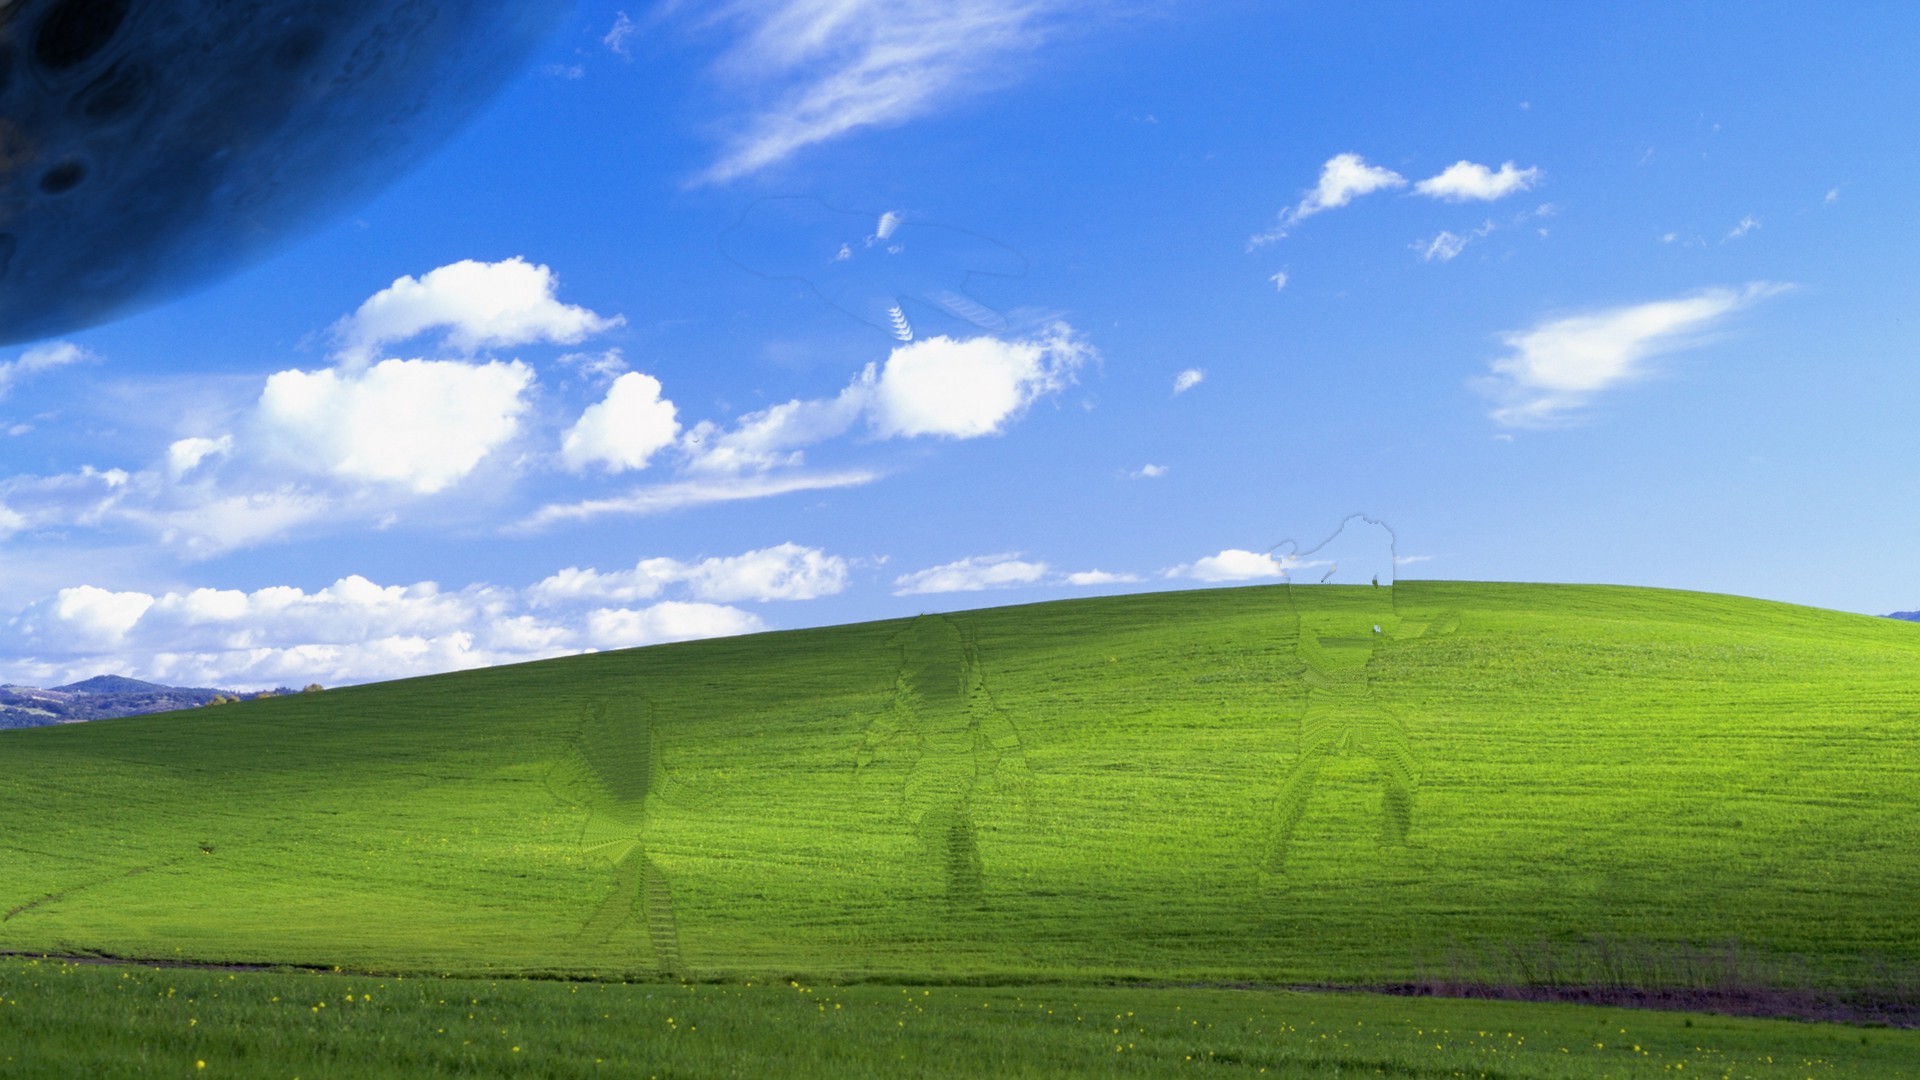 Windows XP, Predator (movie), Alien Vs. Predator, Hill Wallpaper